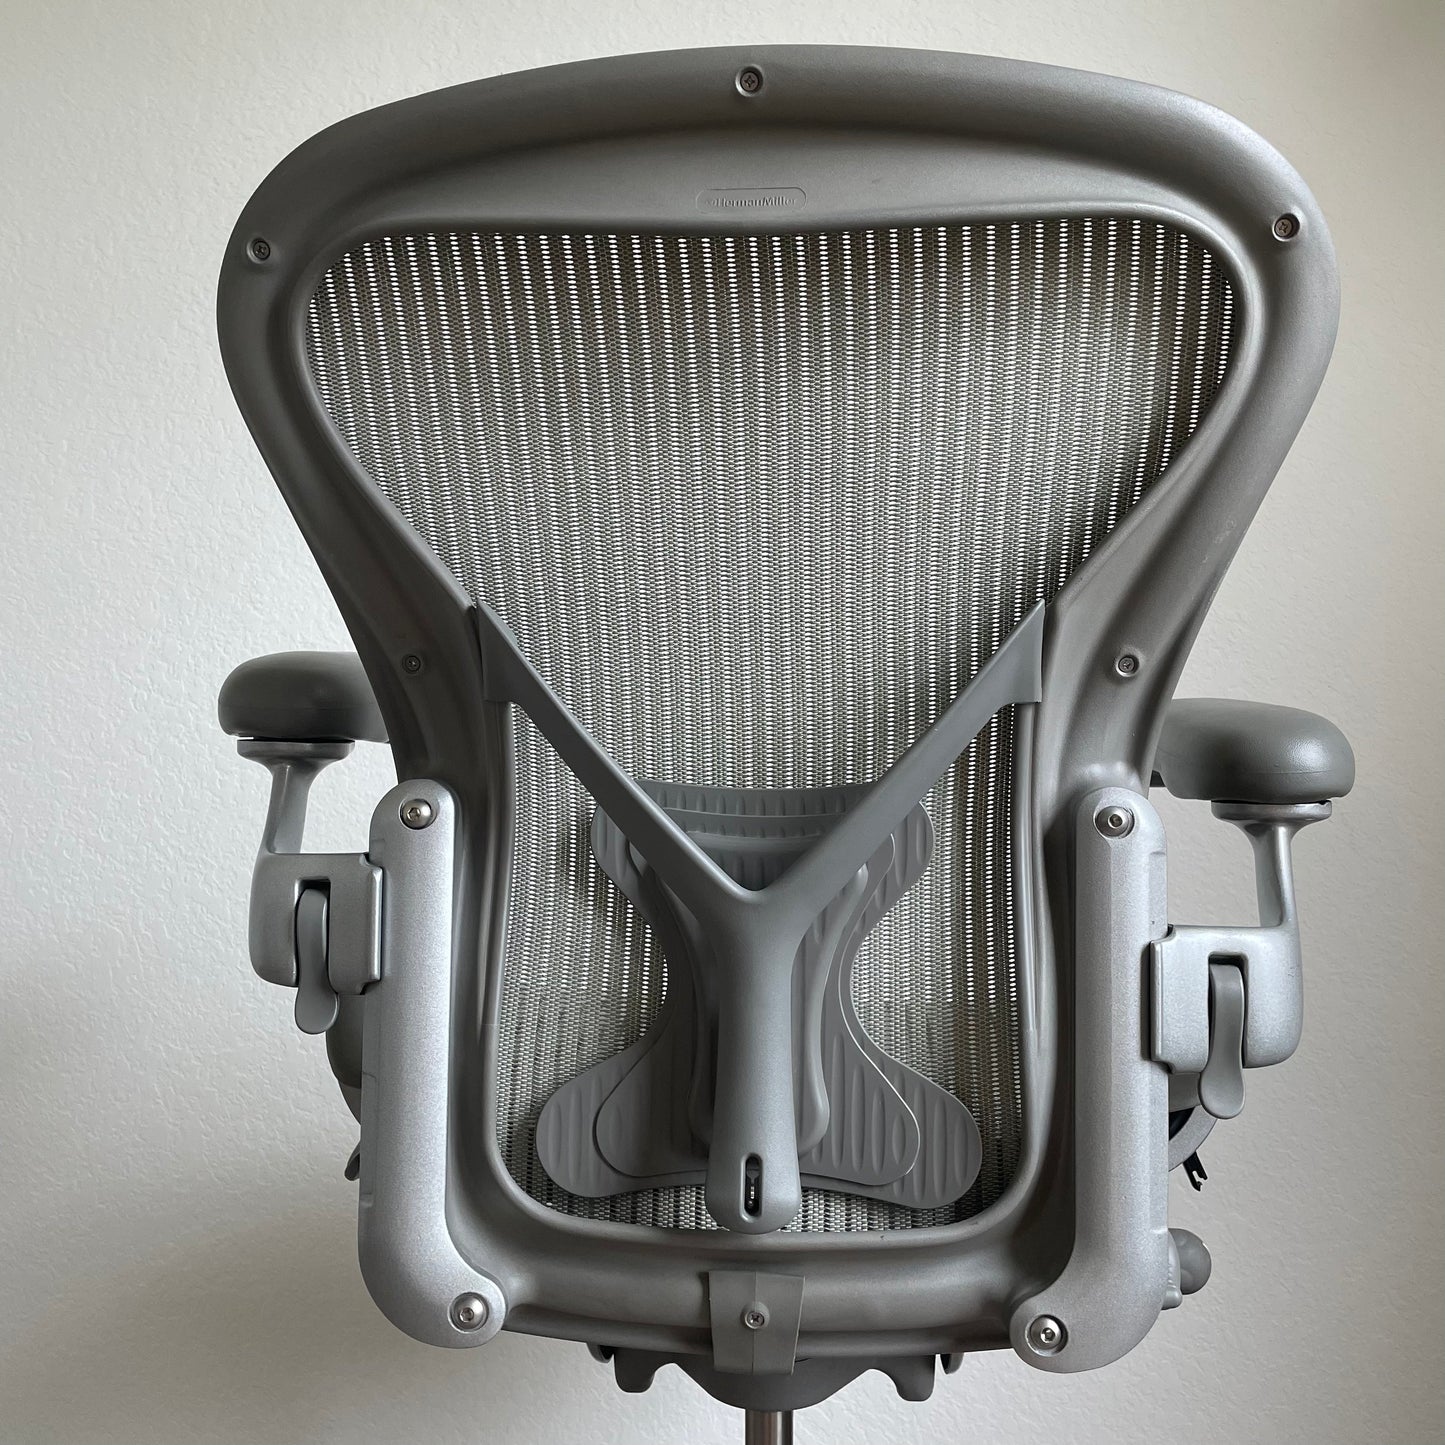 Herman Miller Aeron, Size A Office Chair in Titanium Silver